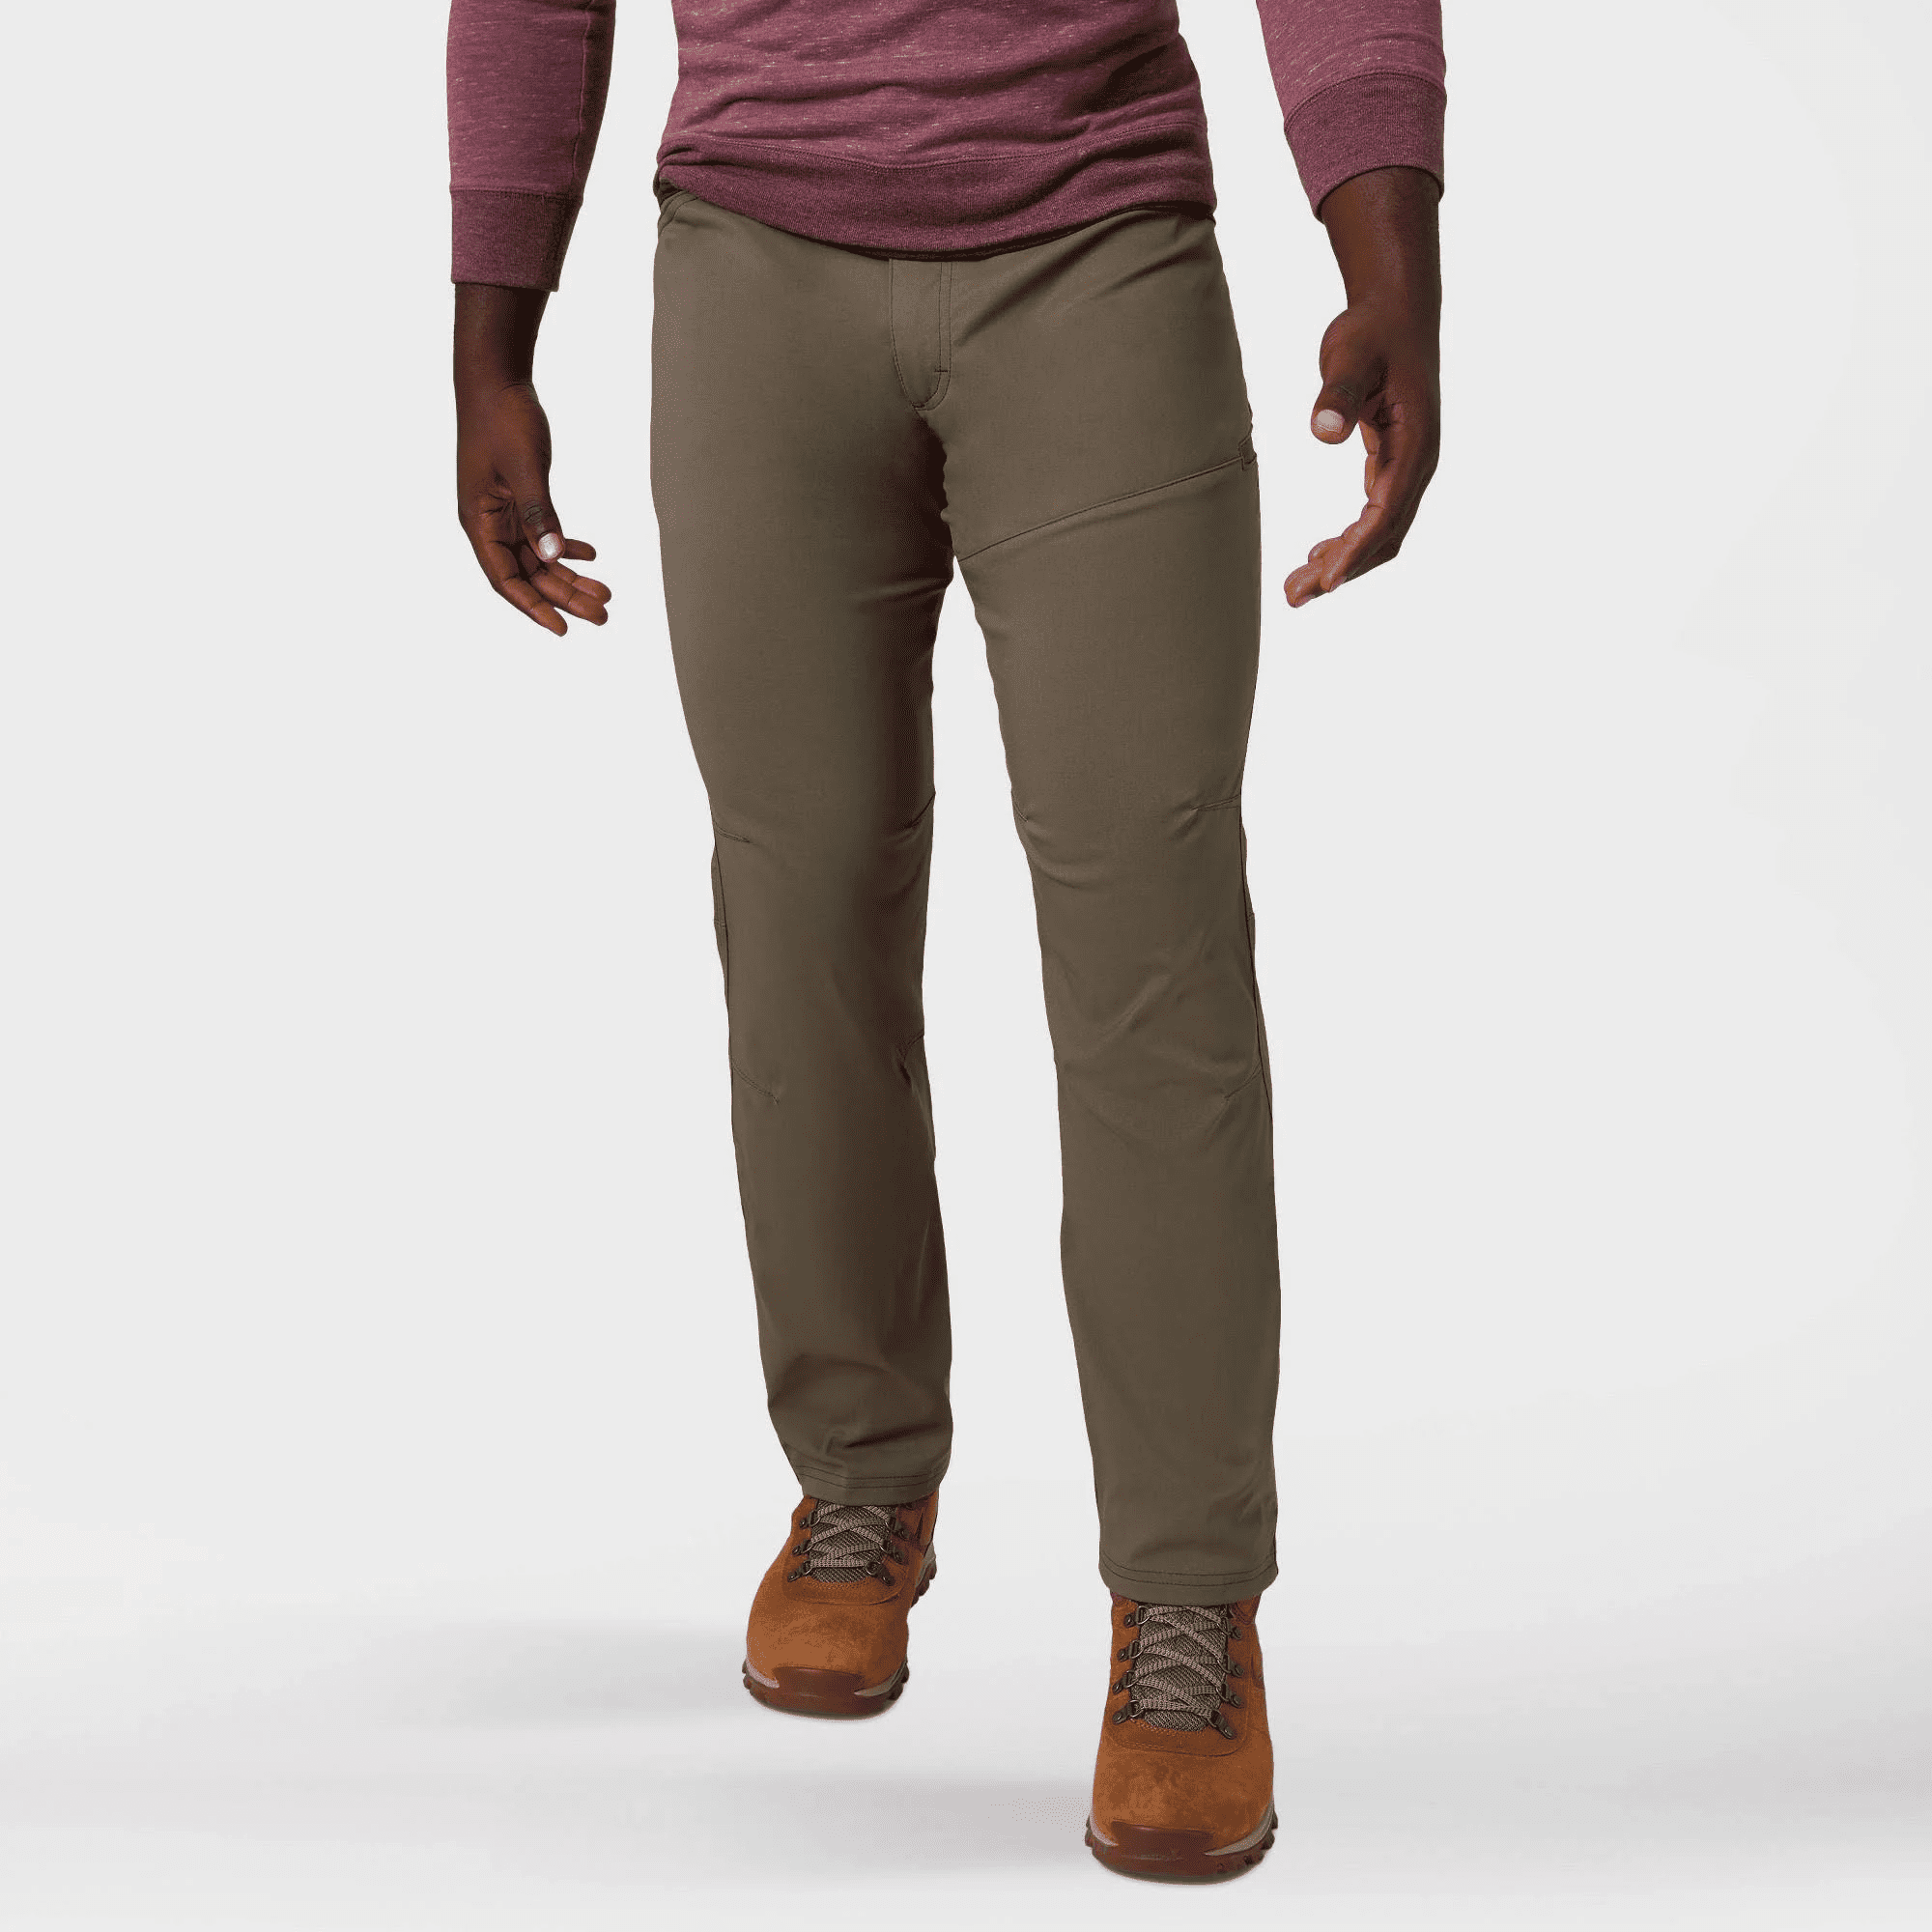 Wrangler Men's ATG Synthetic Relaxed Regular Fit Side Zip 5-Pocket Pants -  Brown, 32X30 